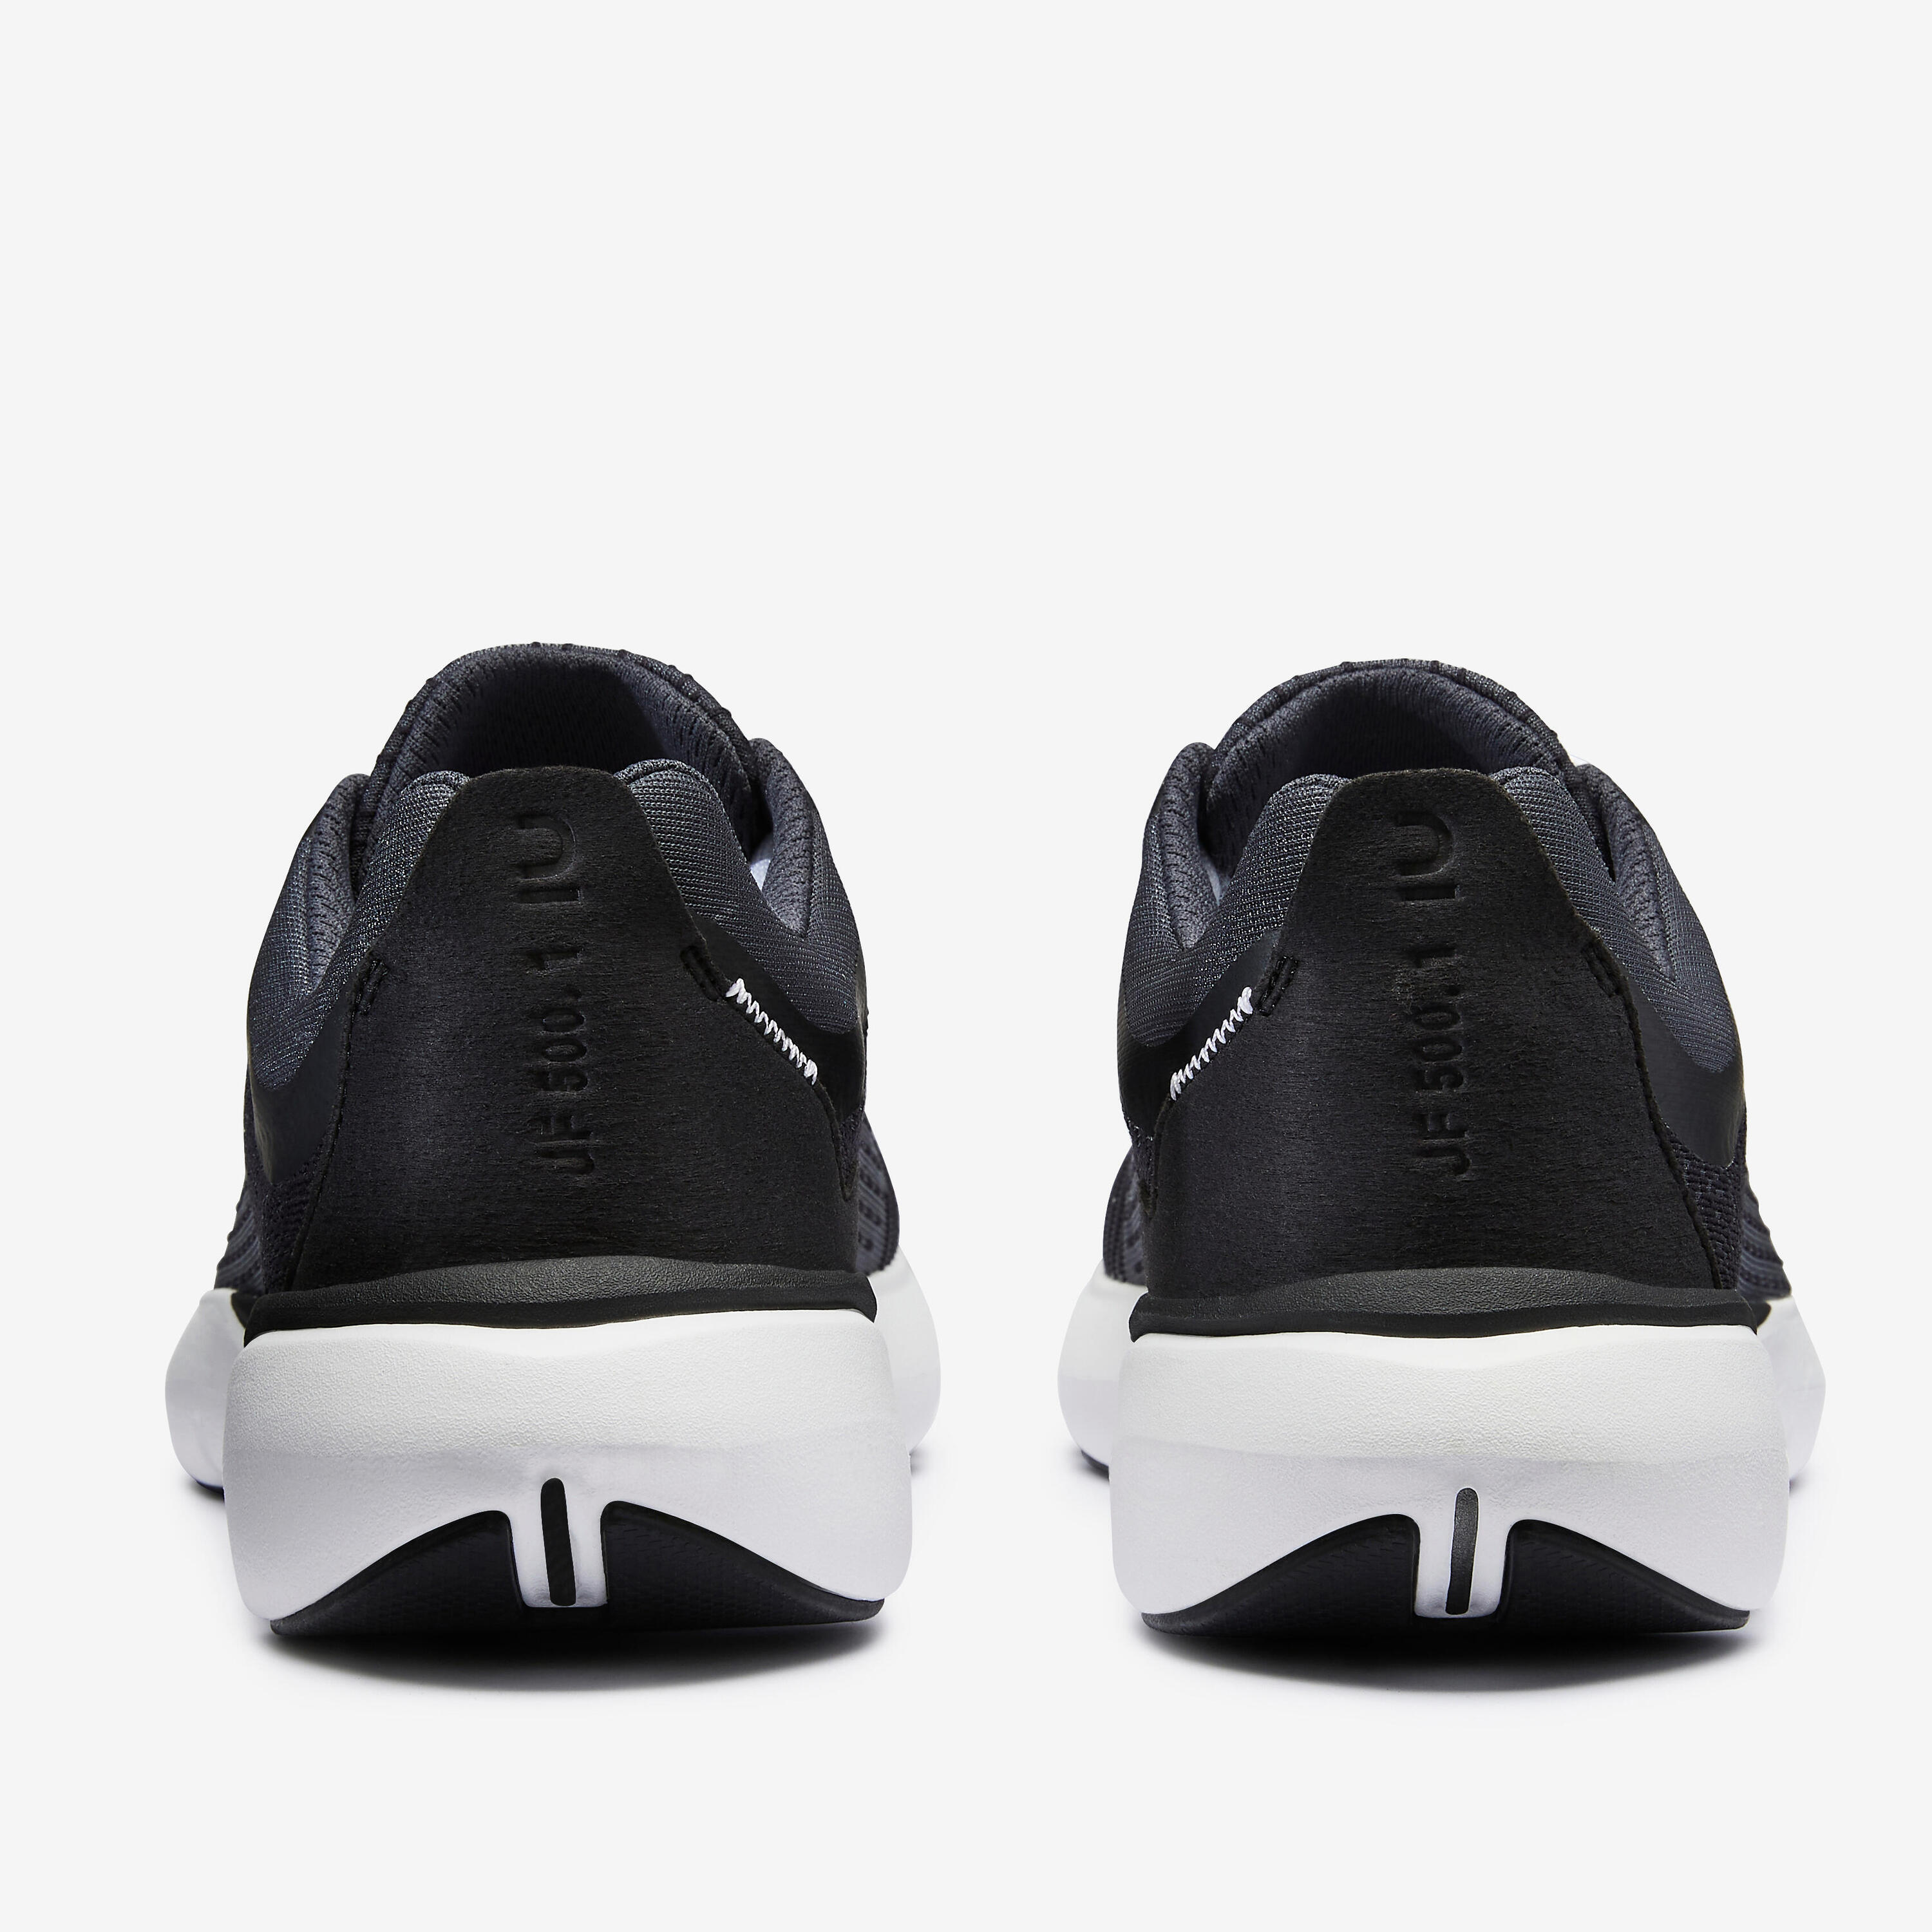 JOGFLOW 500.1 Men's Running Shoes - Black 9/10